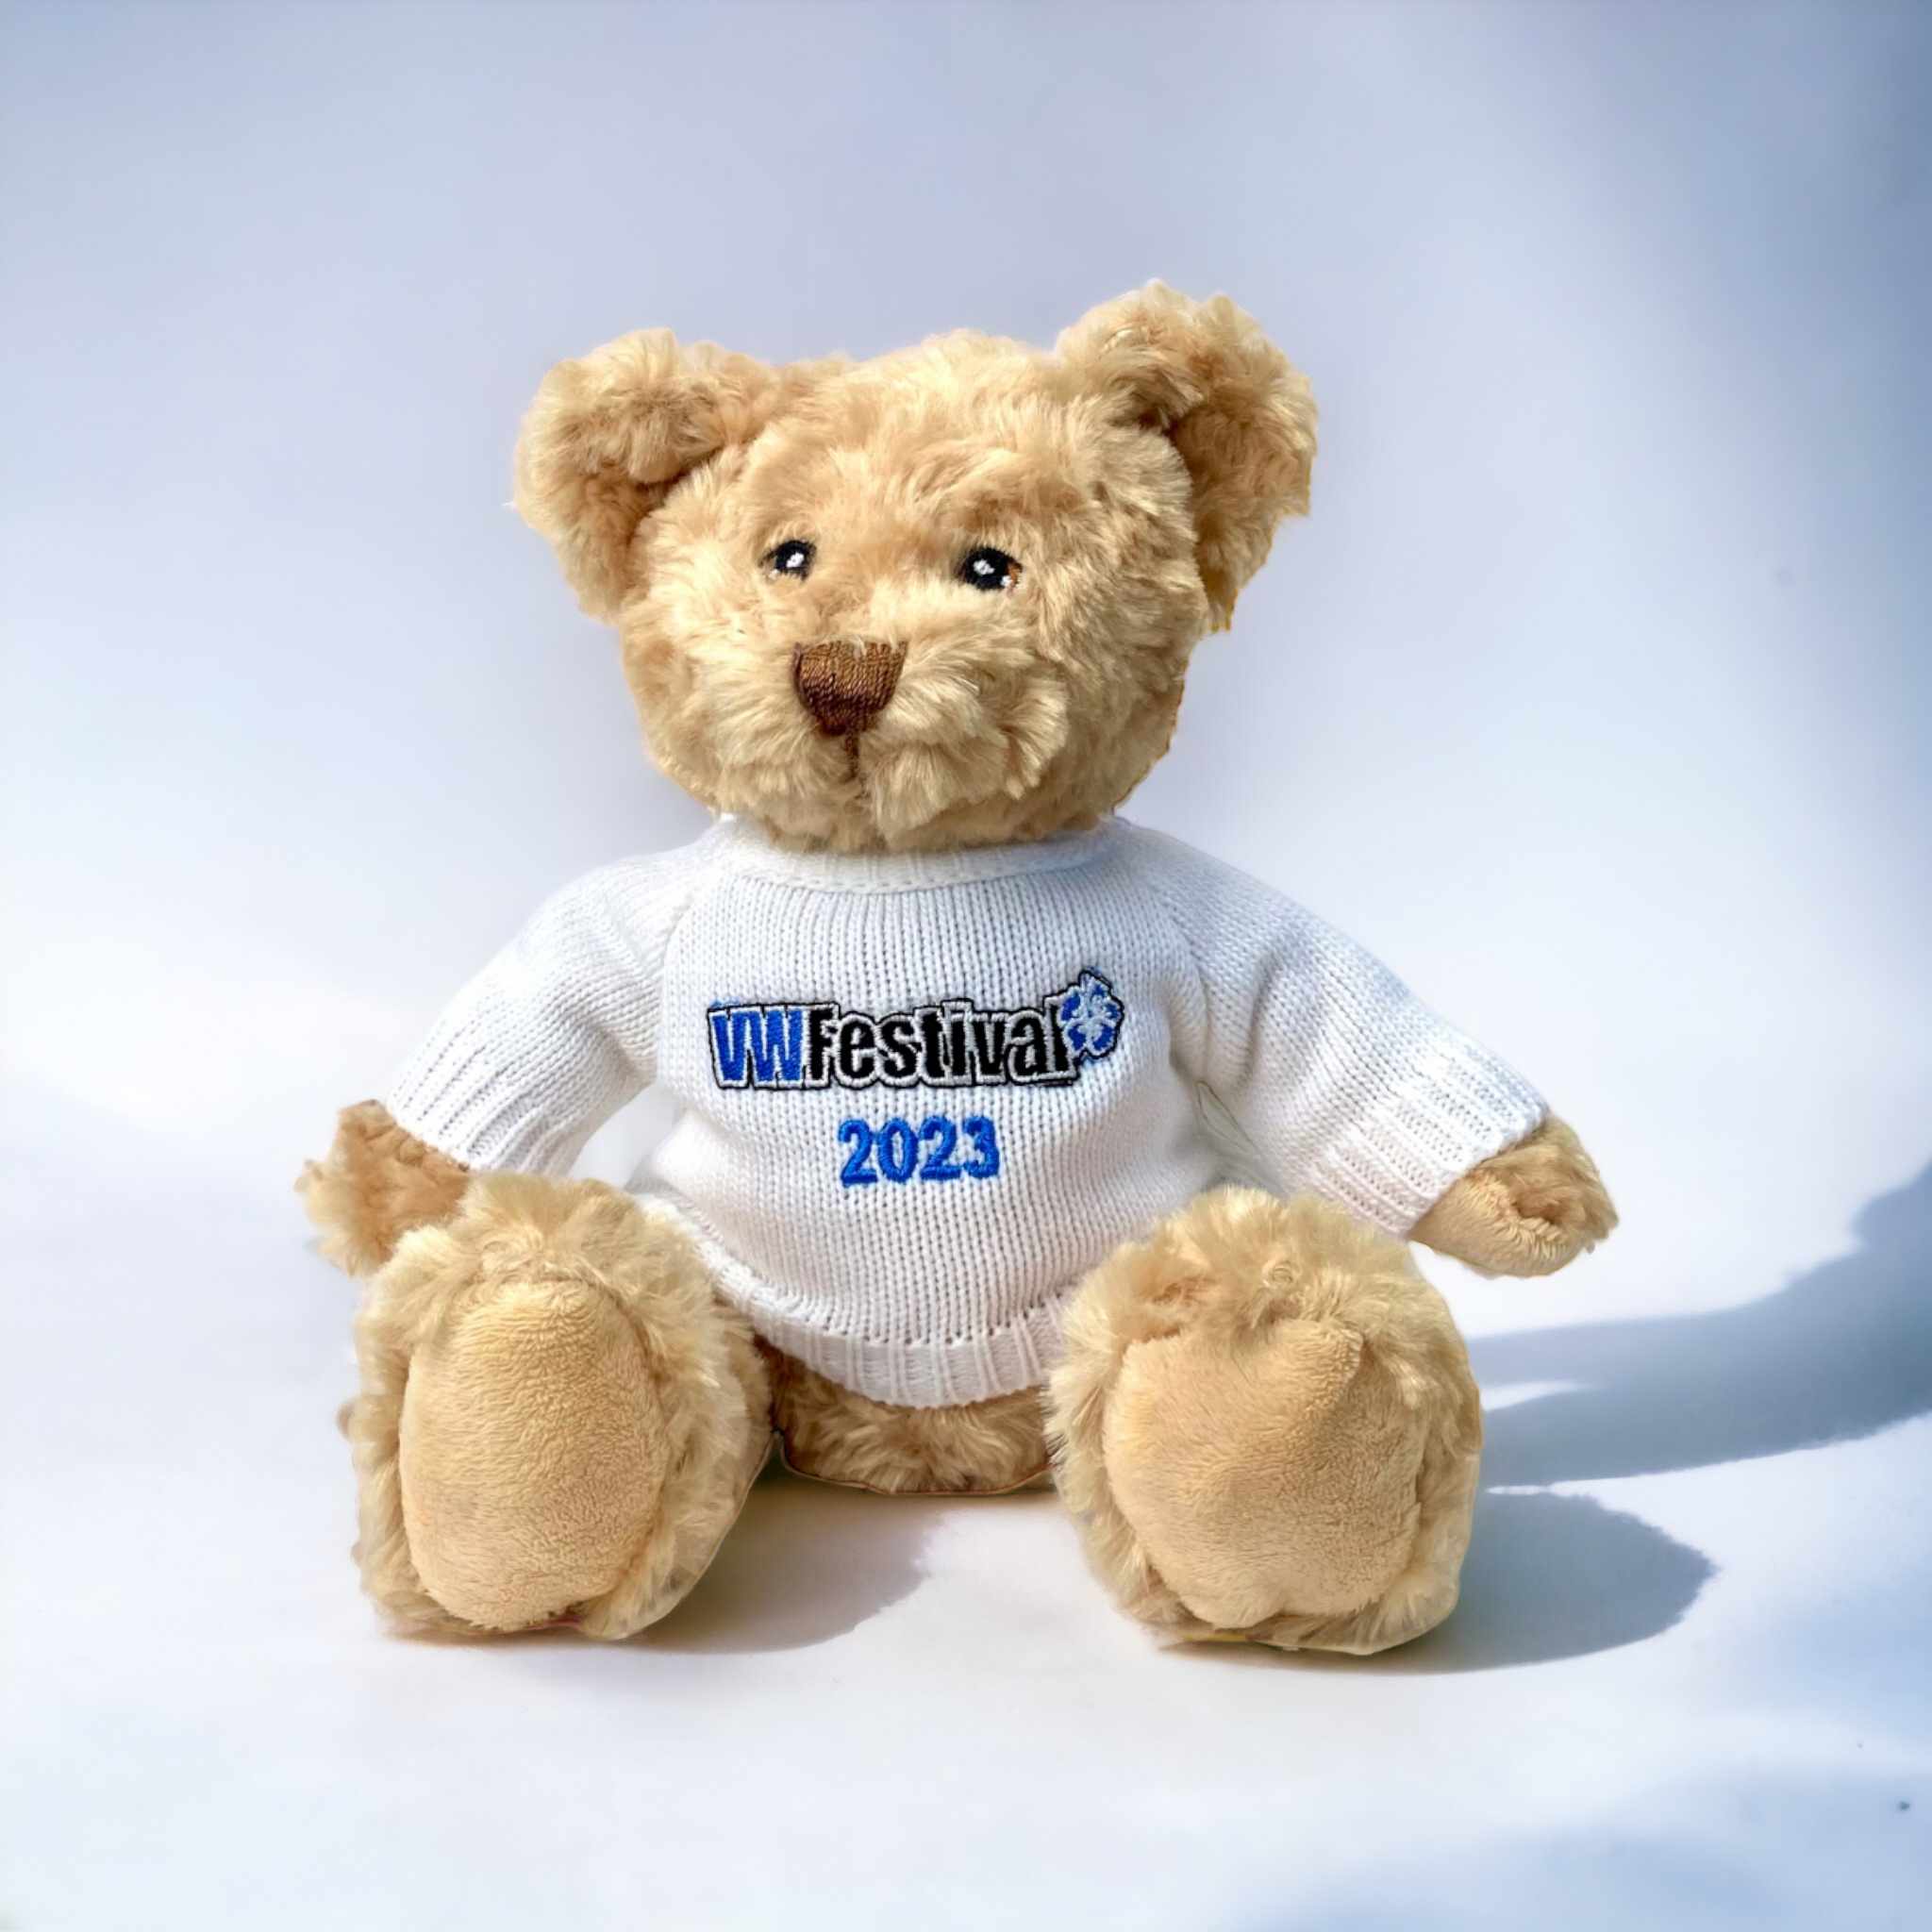 VW festival 2023 teddy bear